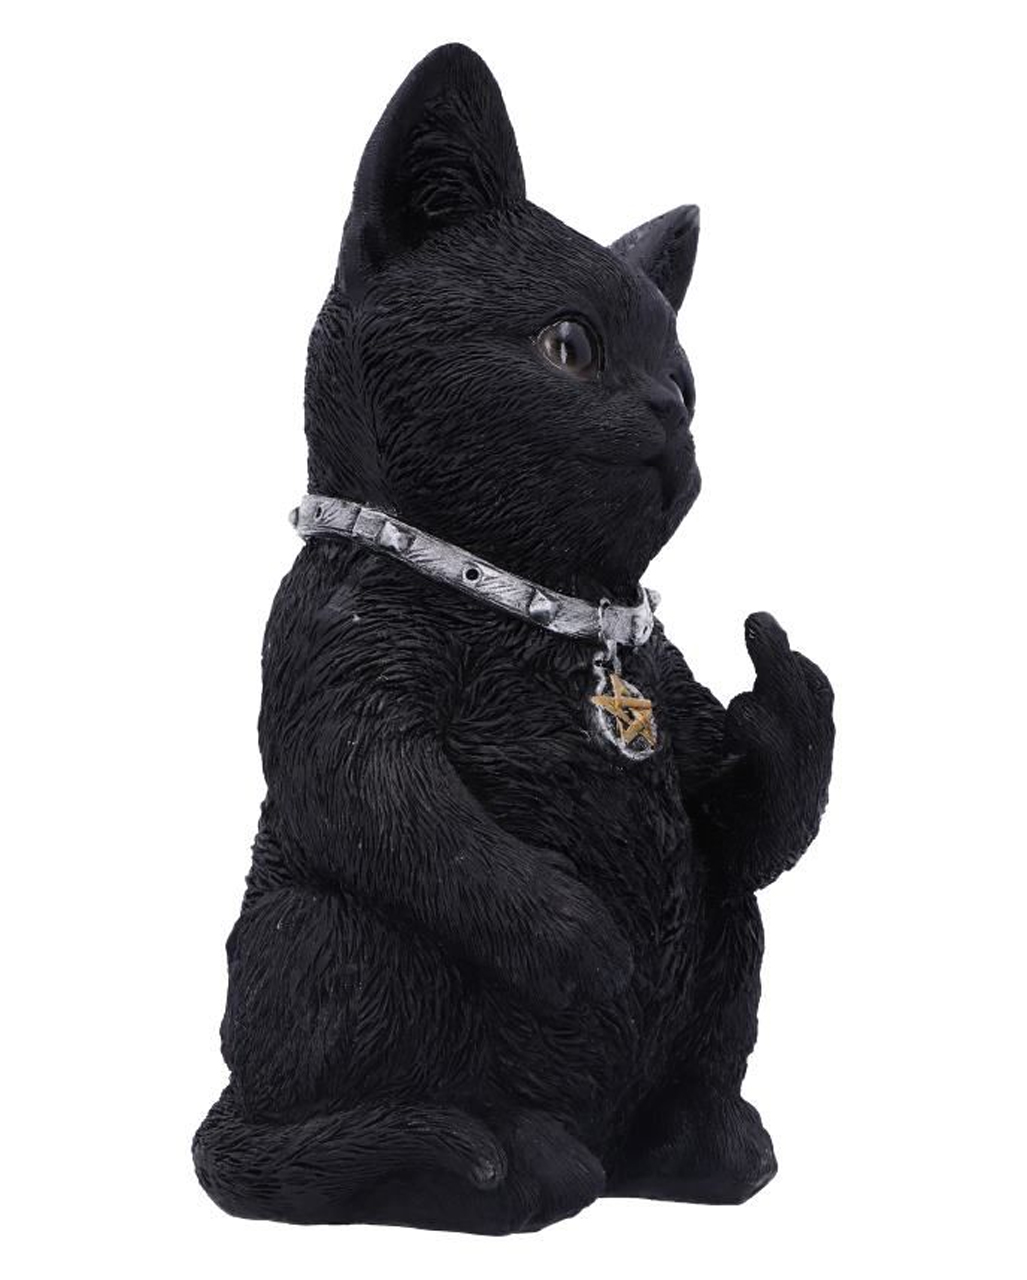  Katze Stinkefinger, schwarz